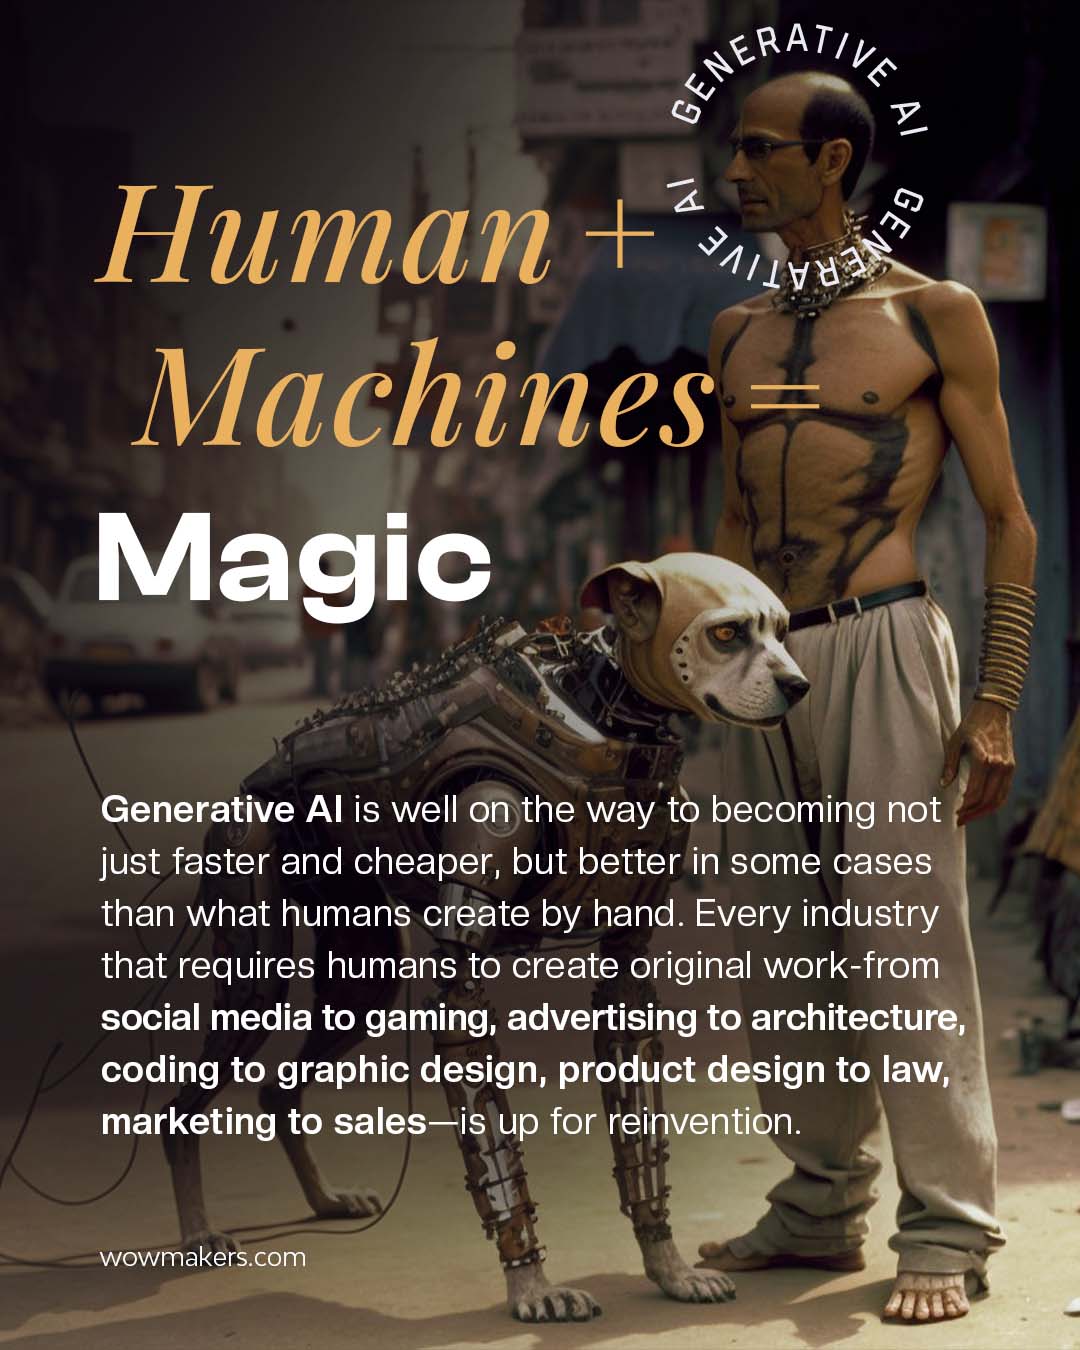 Human + Machines = Magic